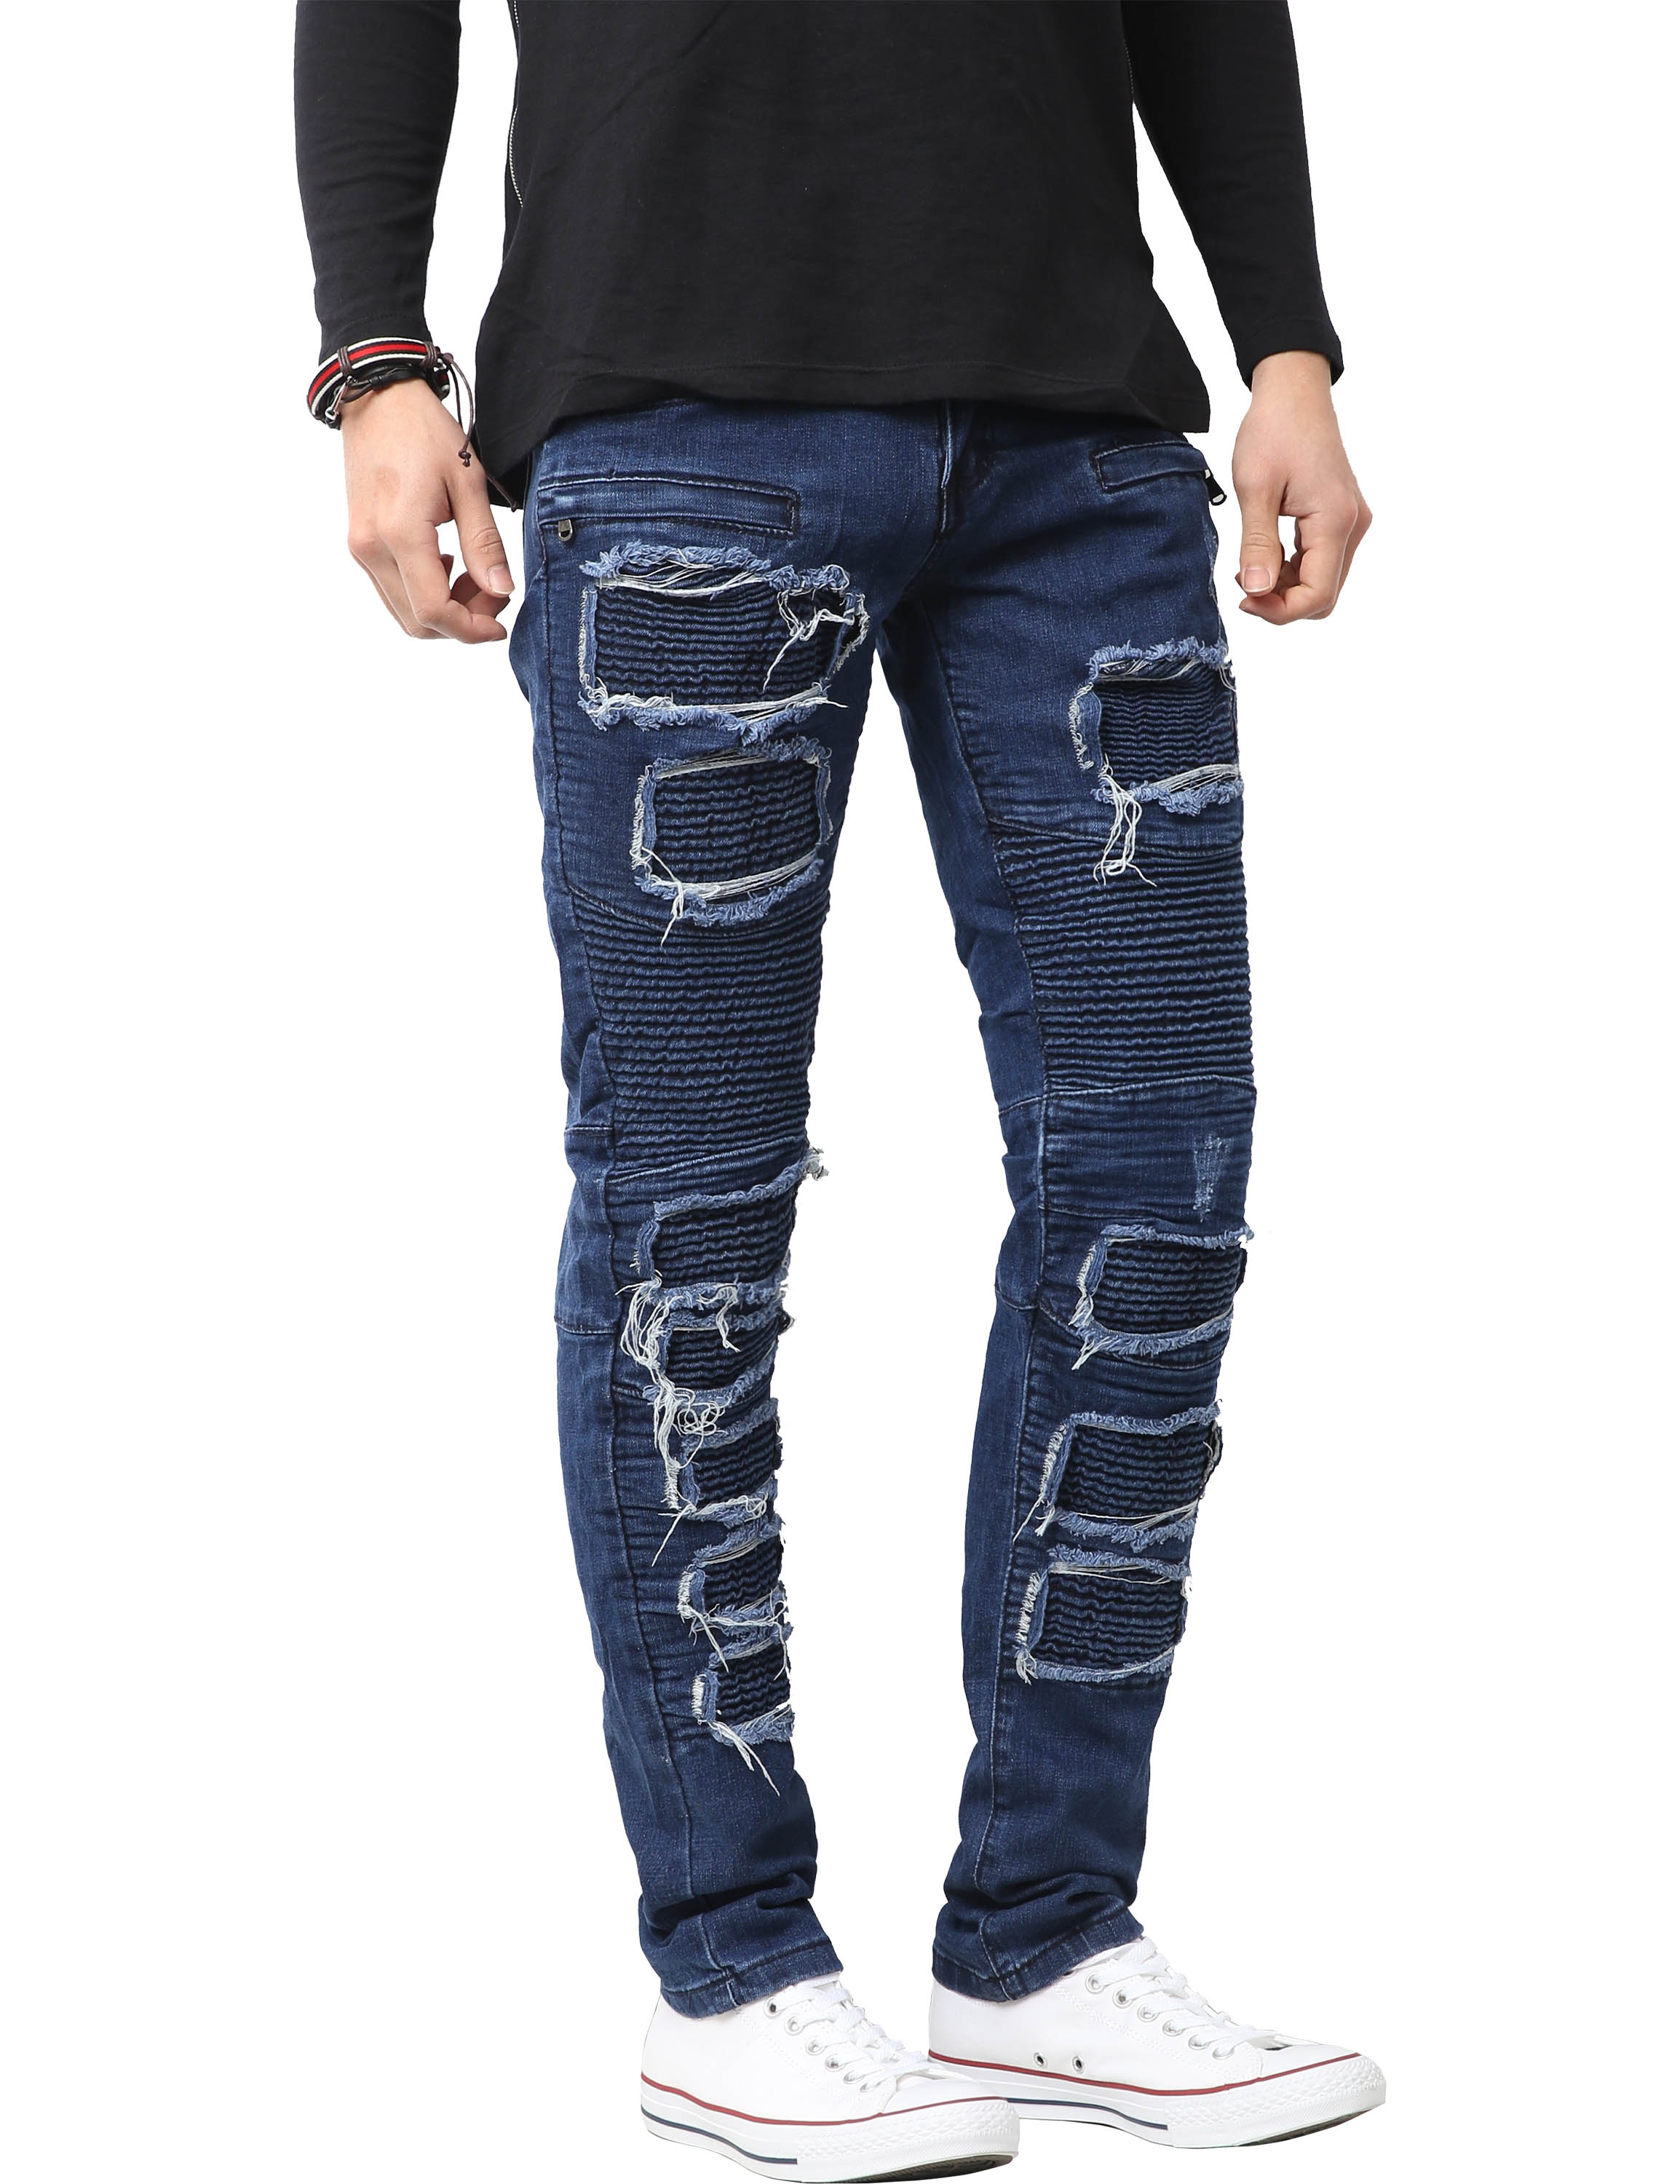 Ma Croix Mens Biker Jeans Distressed Ripped Zipper Straight Slim Fit Stretch Denim Pants - image 1 of 5